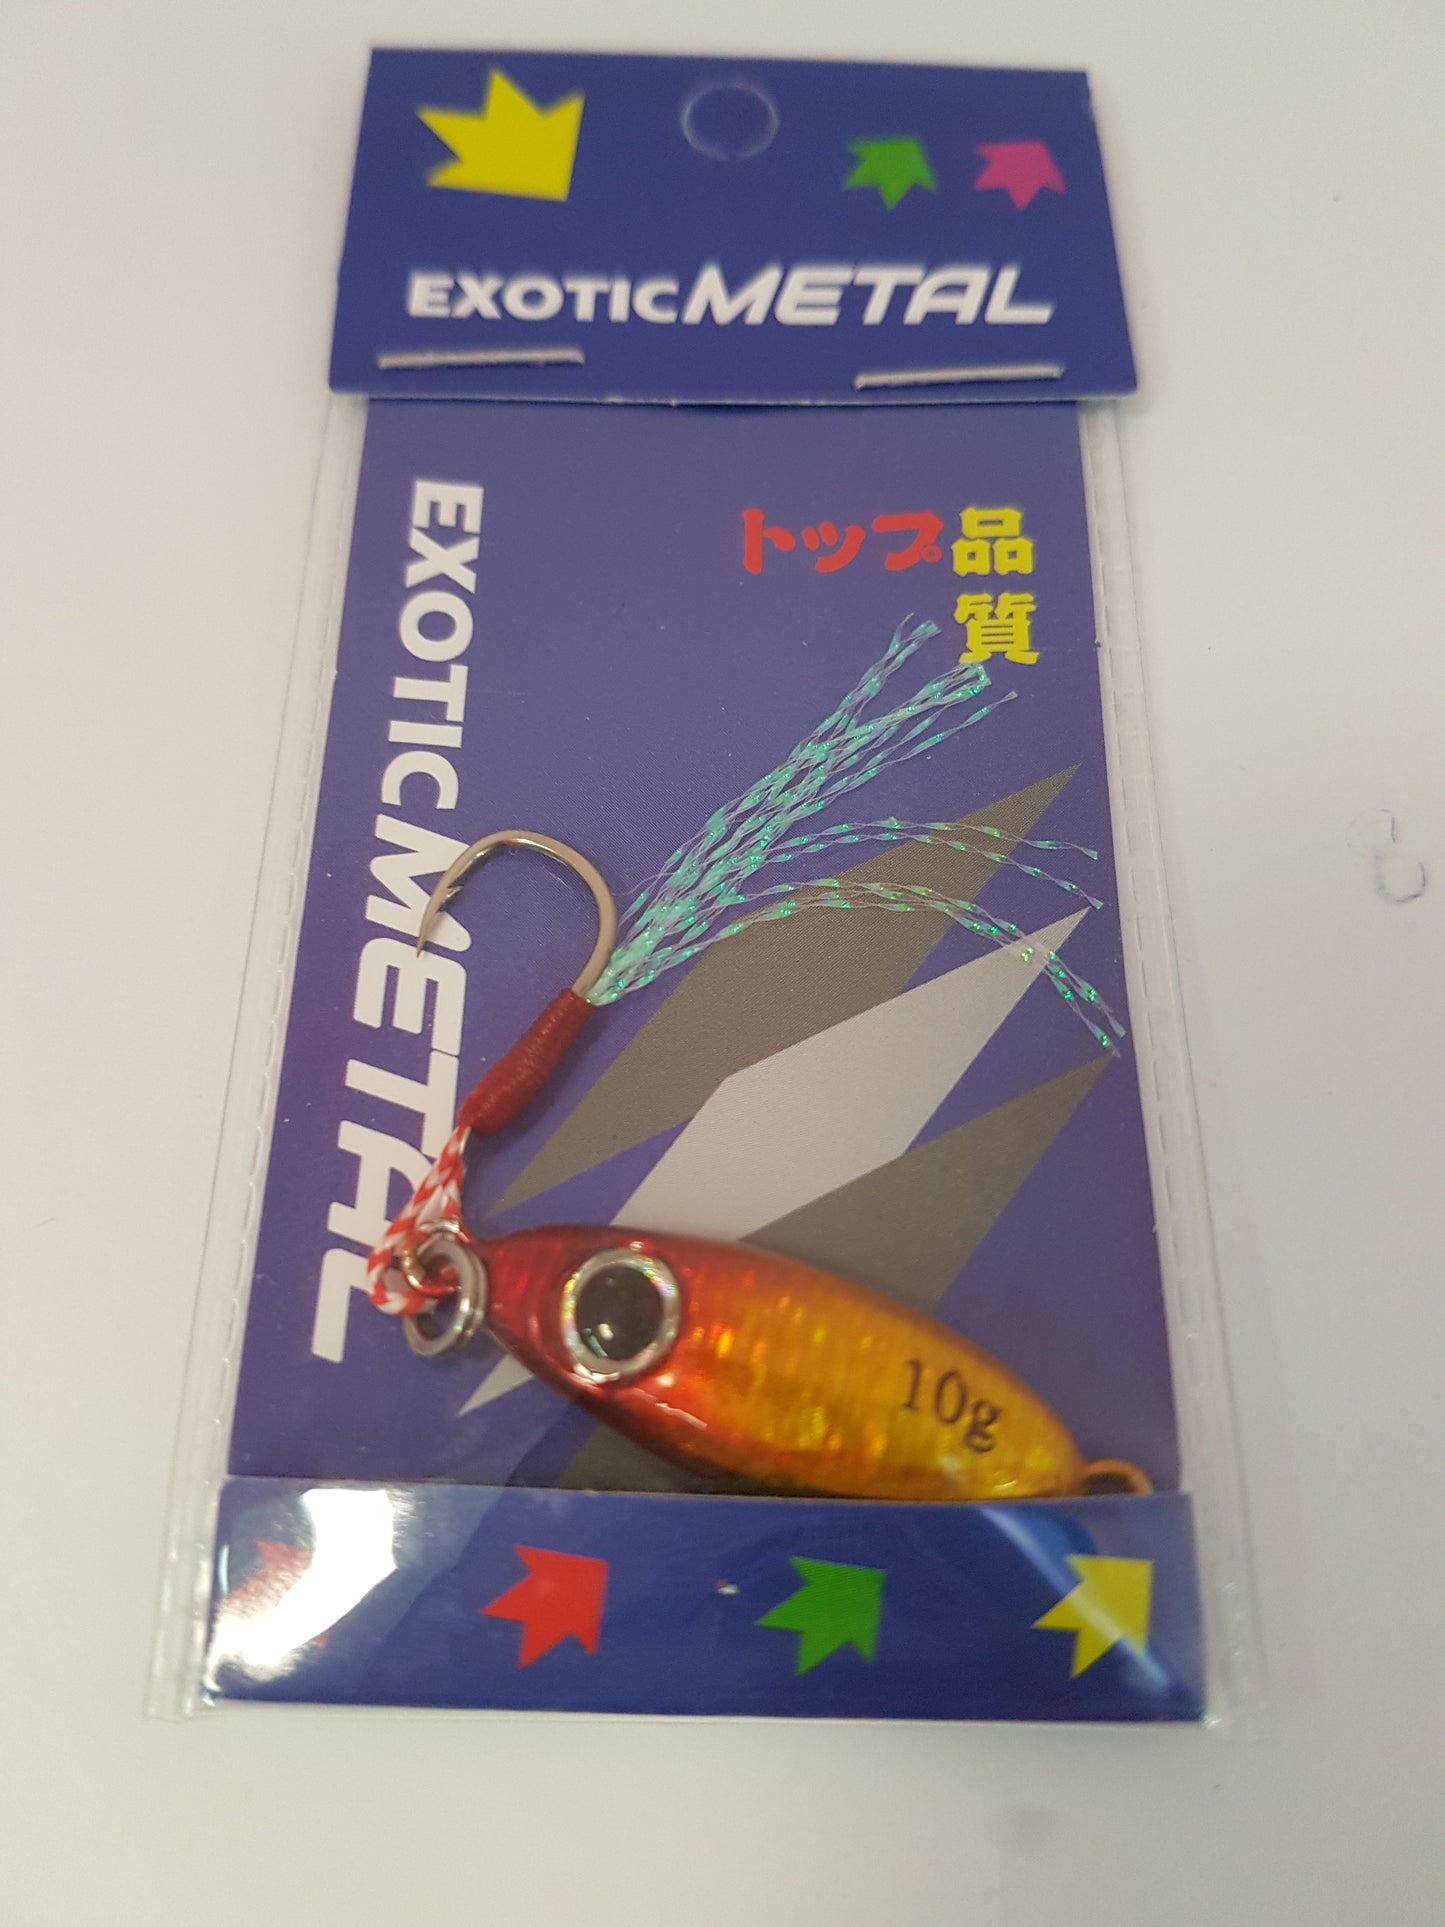 Superse Exotic Metal Micro Rocker Jig 10g